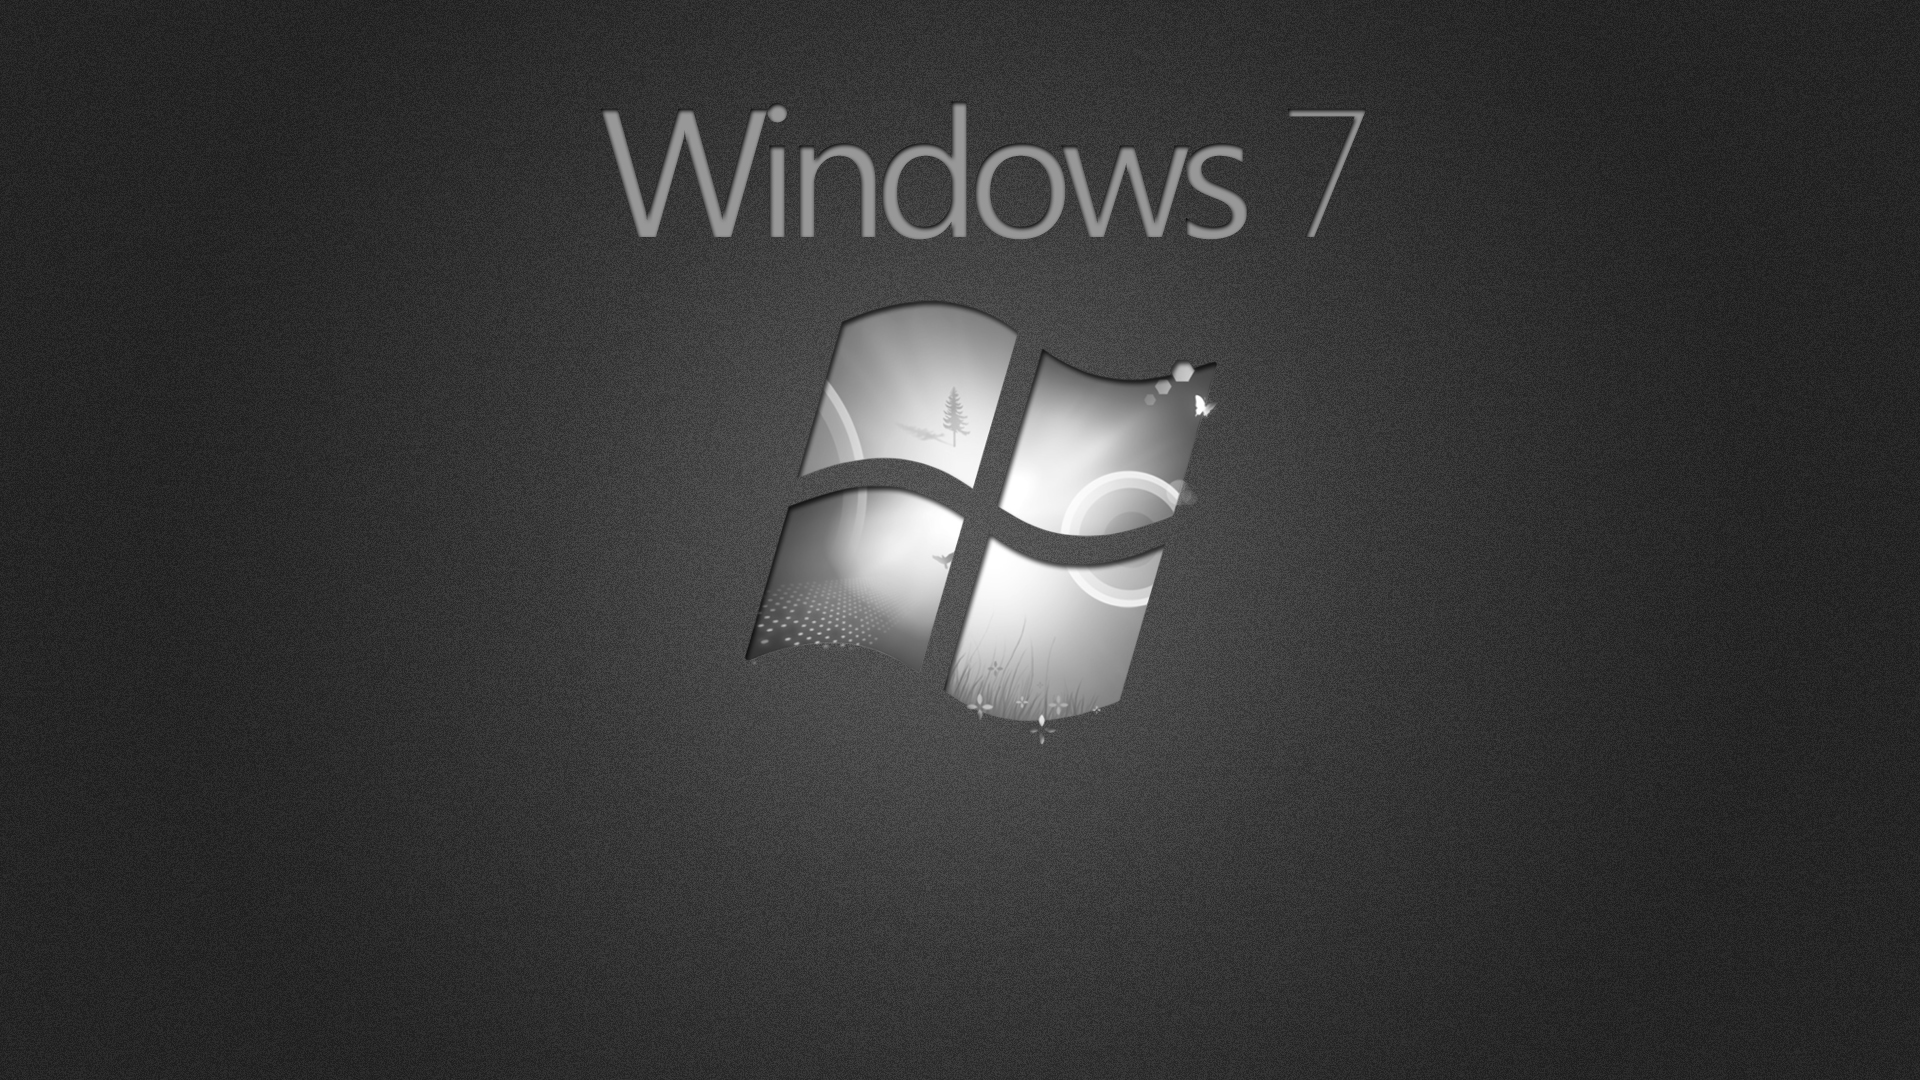 Windows 7 Wallpaper Black And White #40 Wallpaper | idwallpics.com